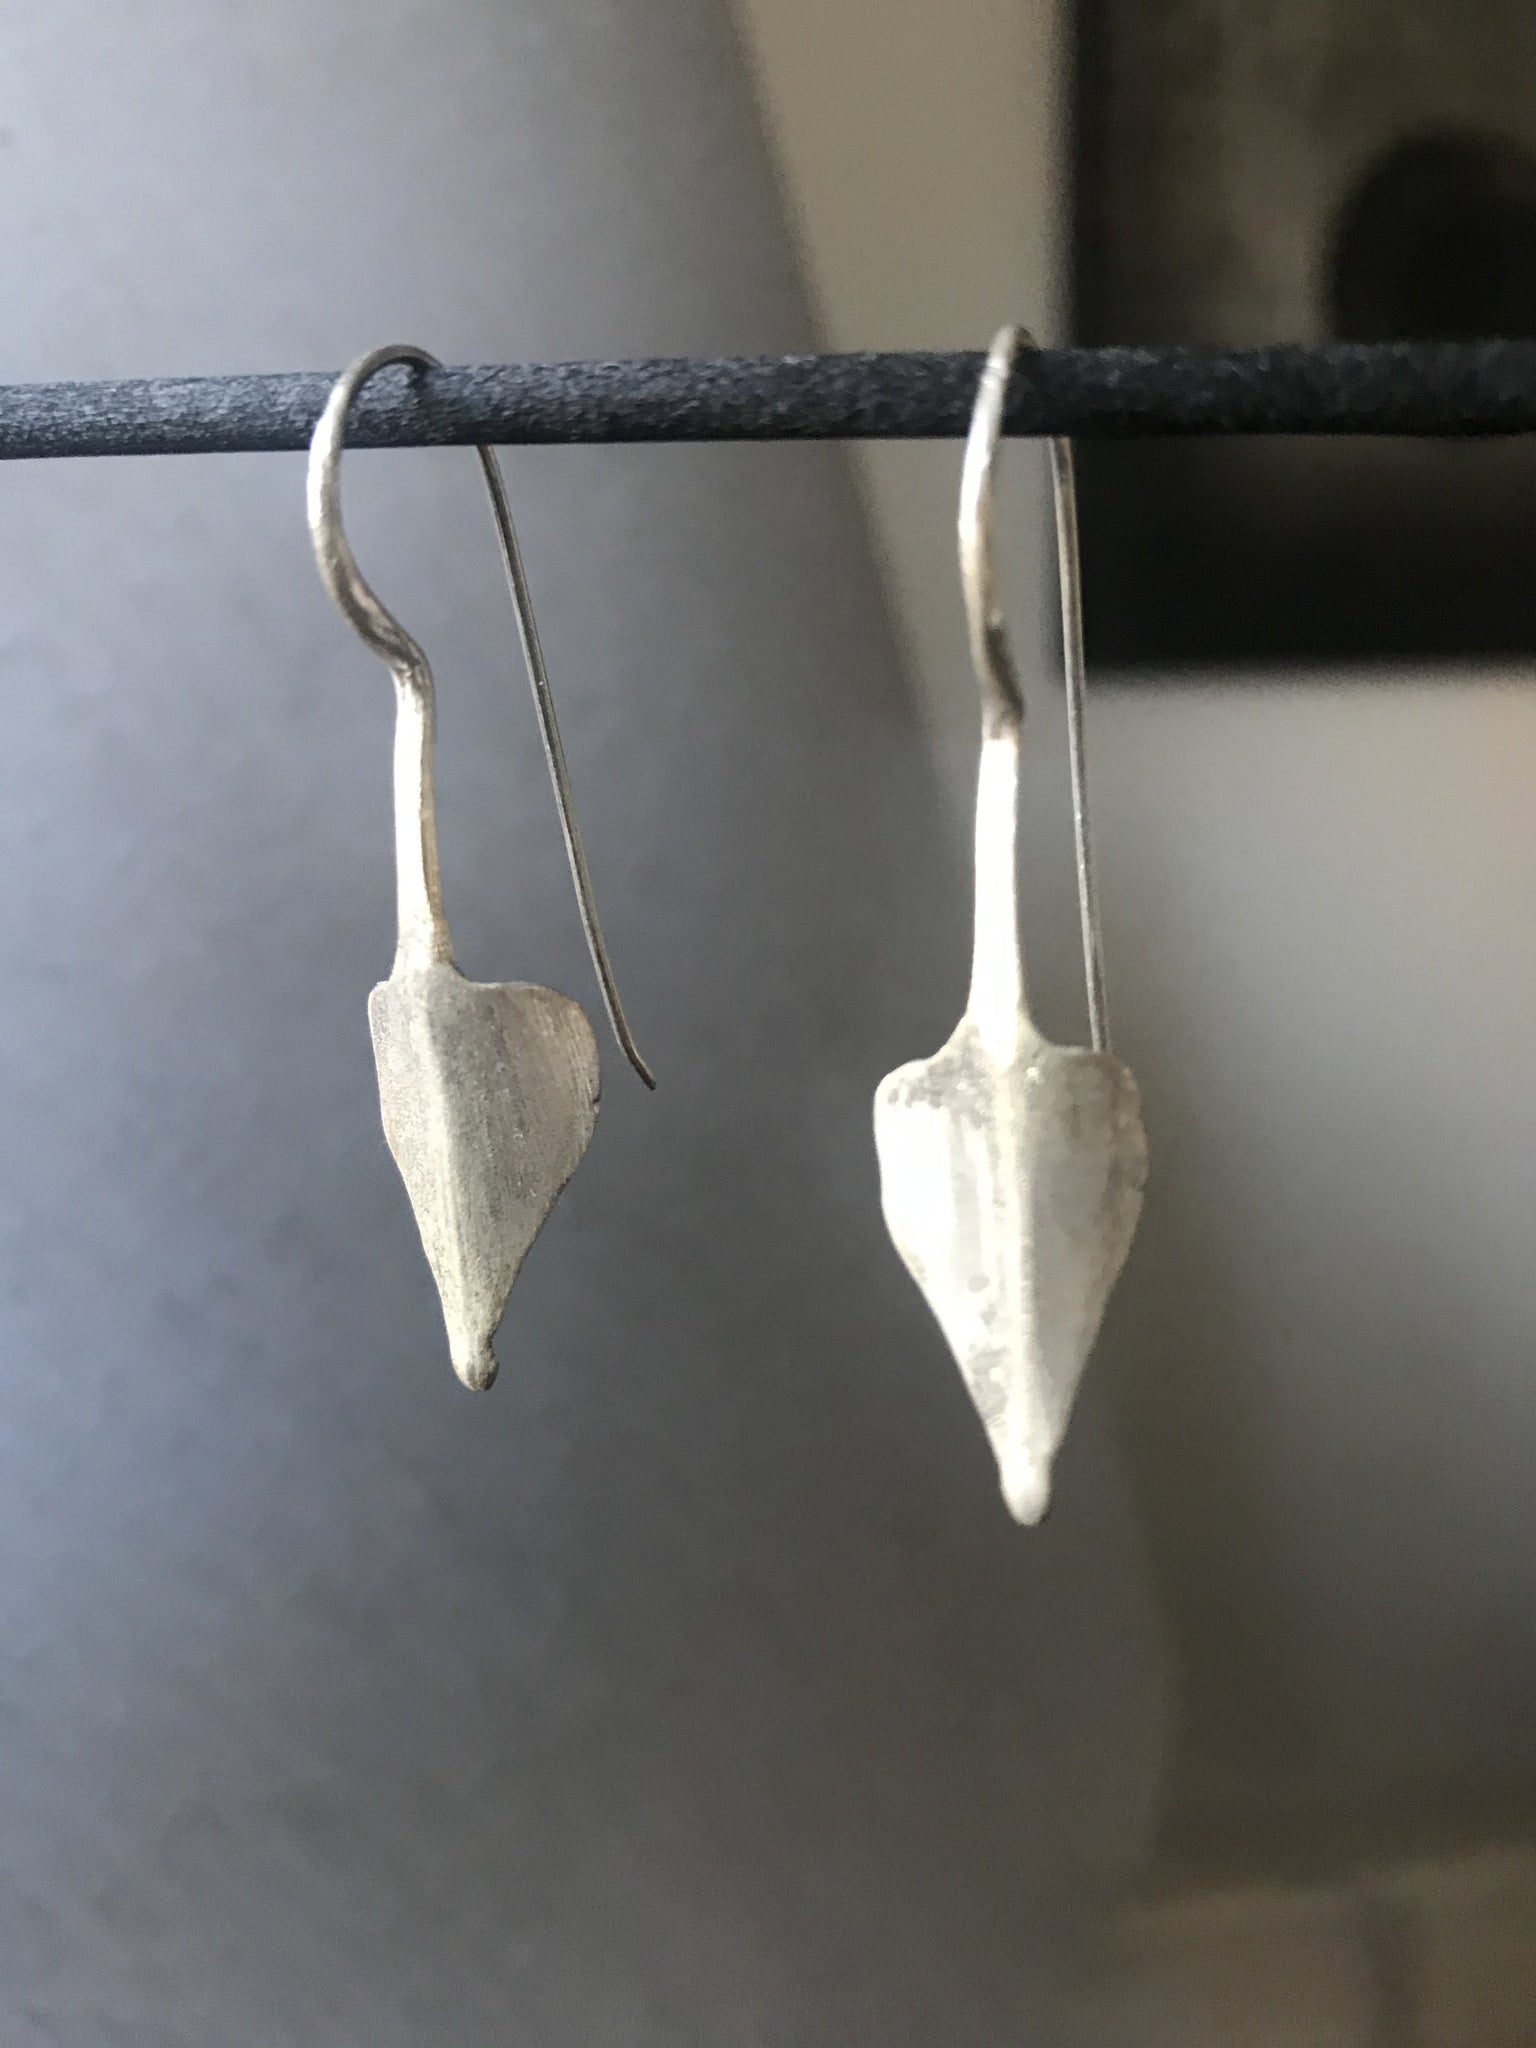 Tribal earrings - brushed silver